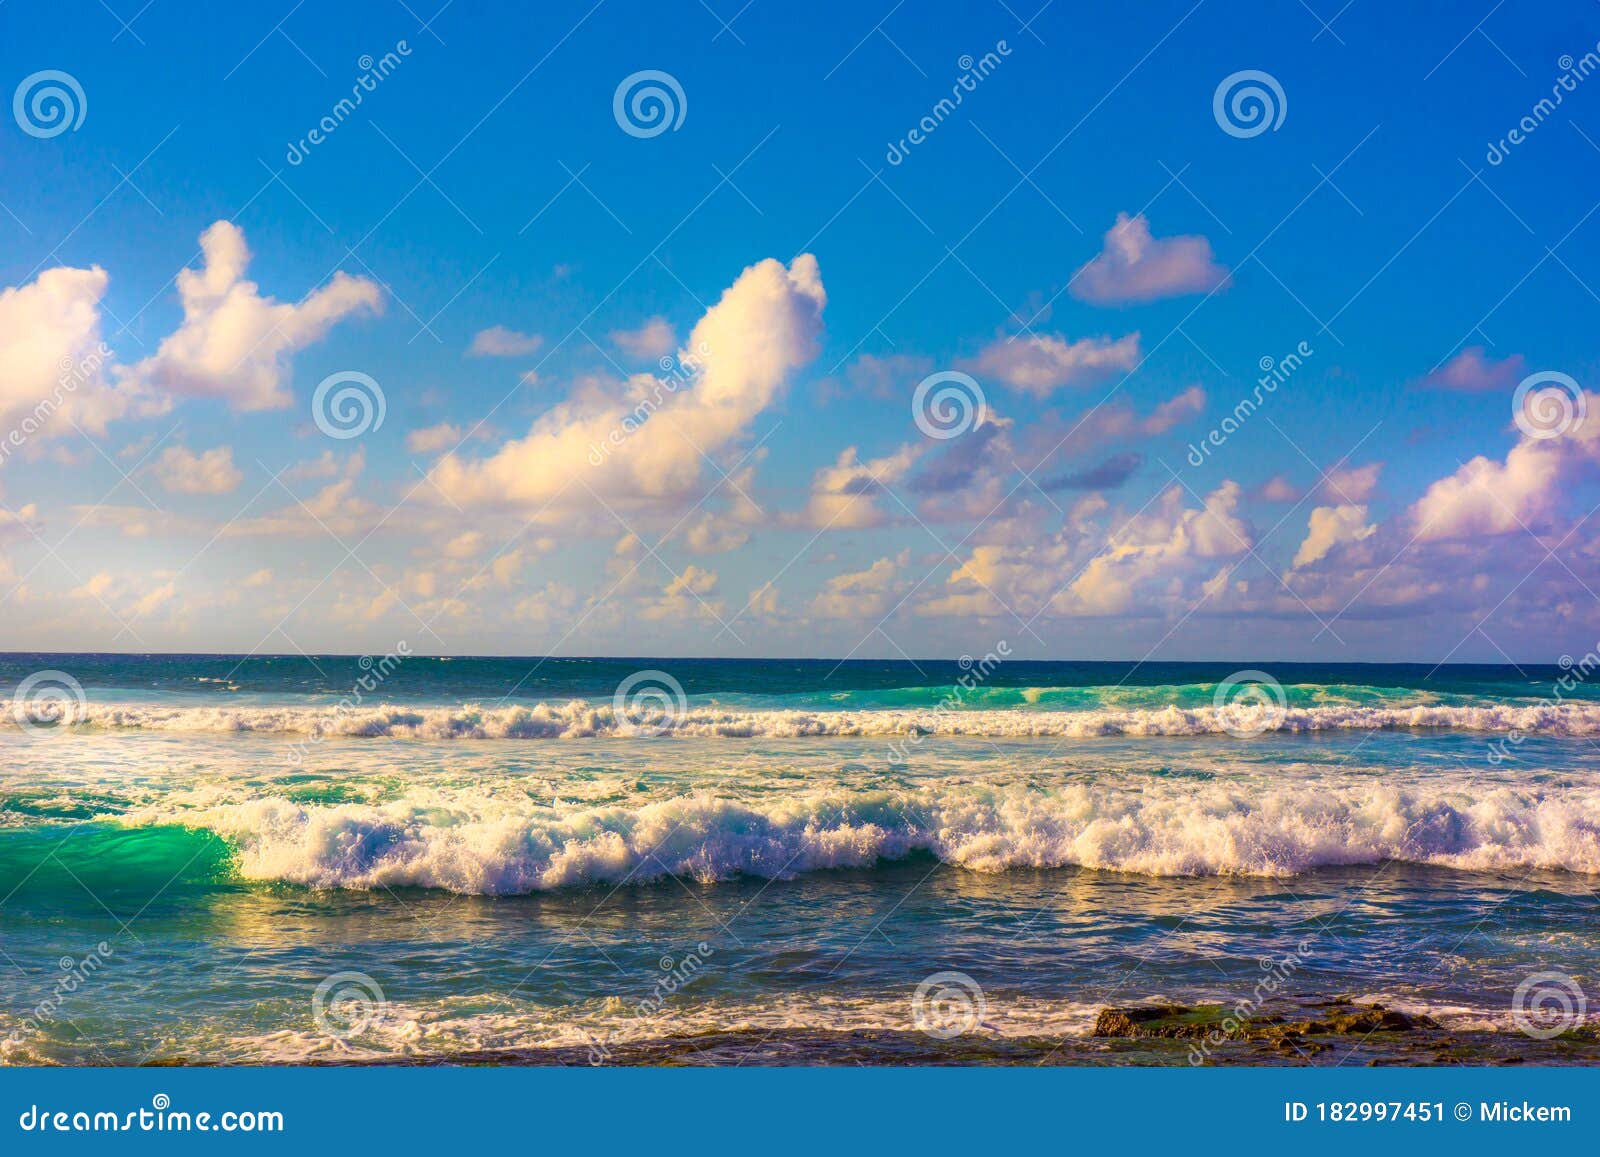 Coastline Hawaiian Island Seascape Stock Image - Image of highlight ...